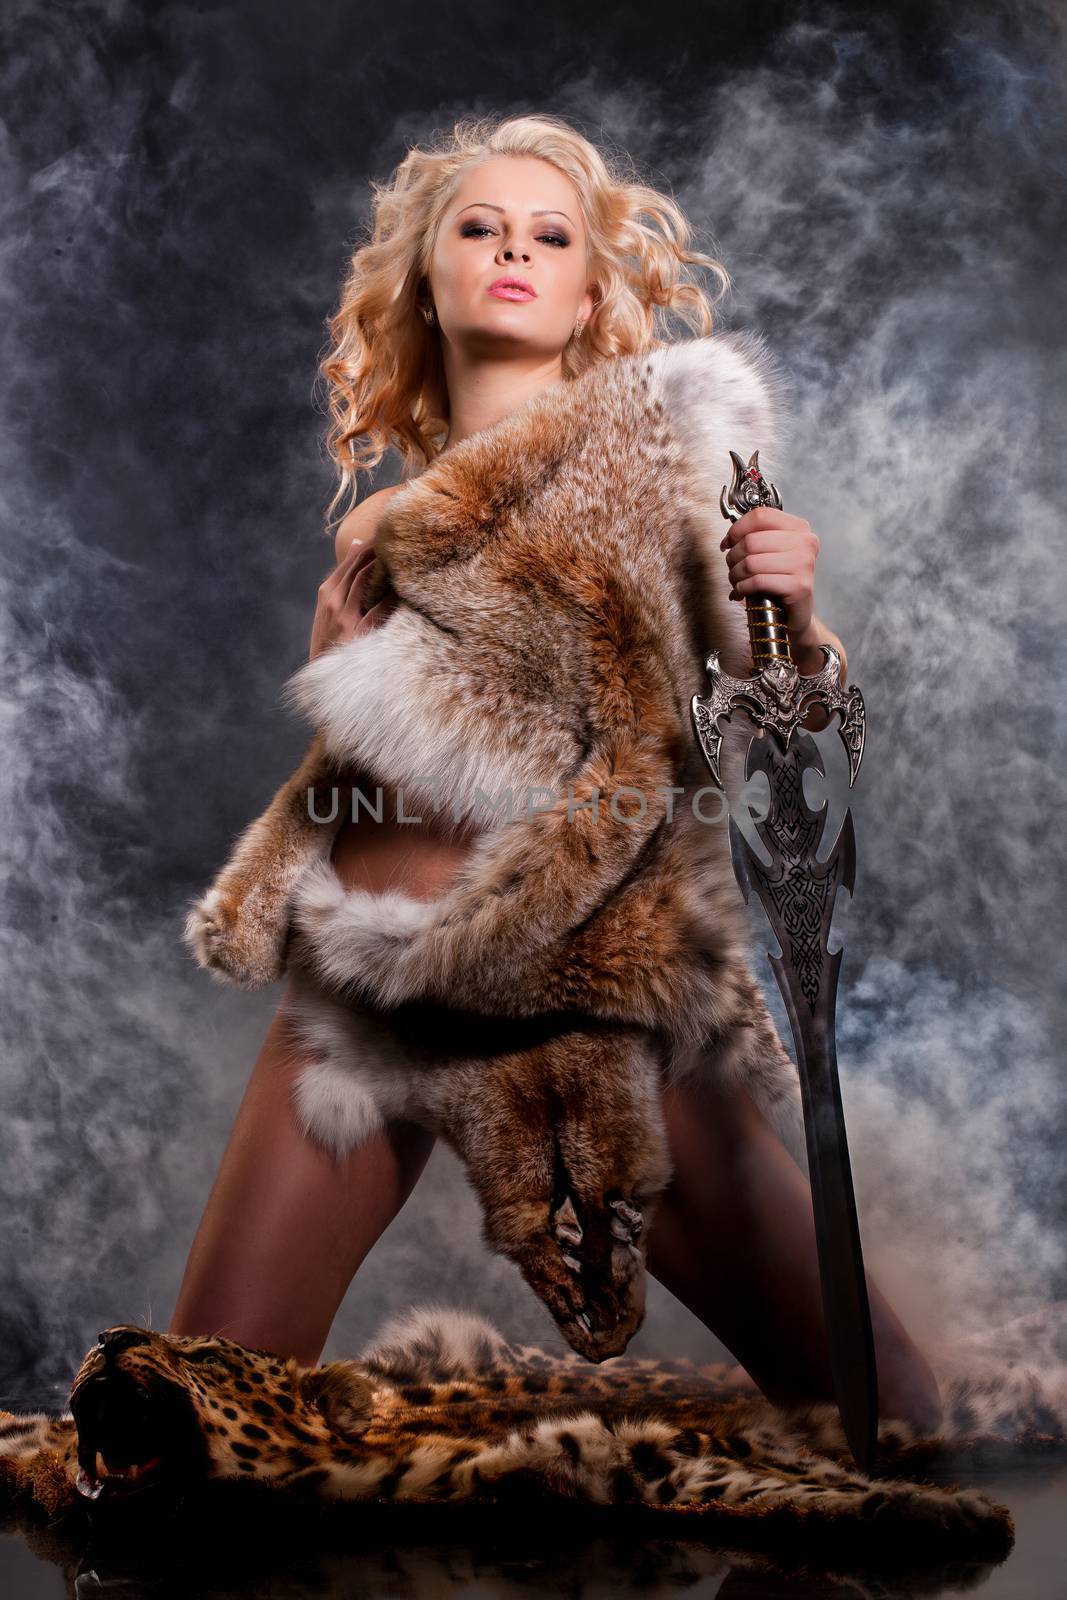 Woman In Fur With Sword by Fotoskat